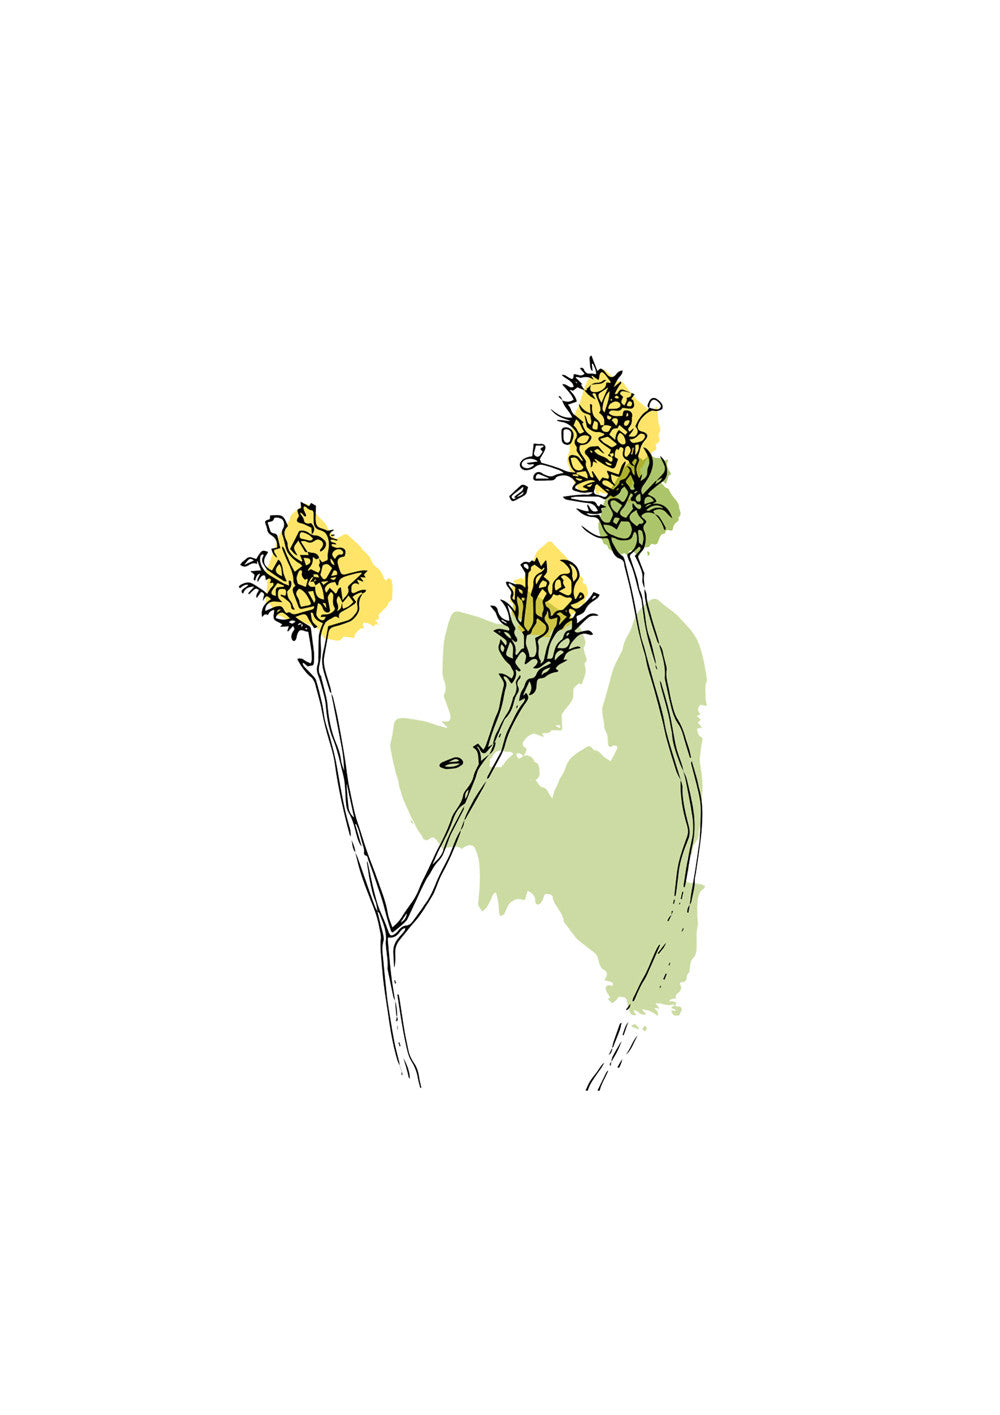 Wildflower-buds-scaled-to-A4.jpg